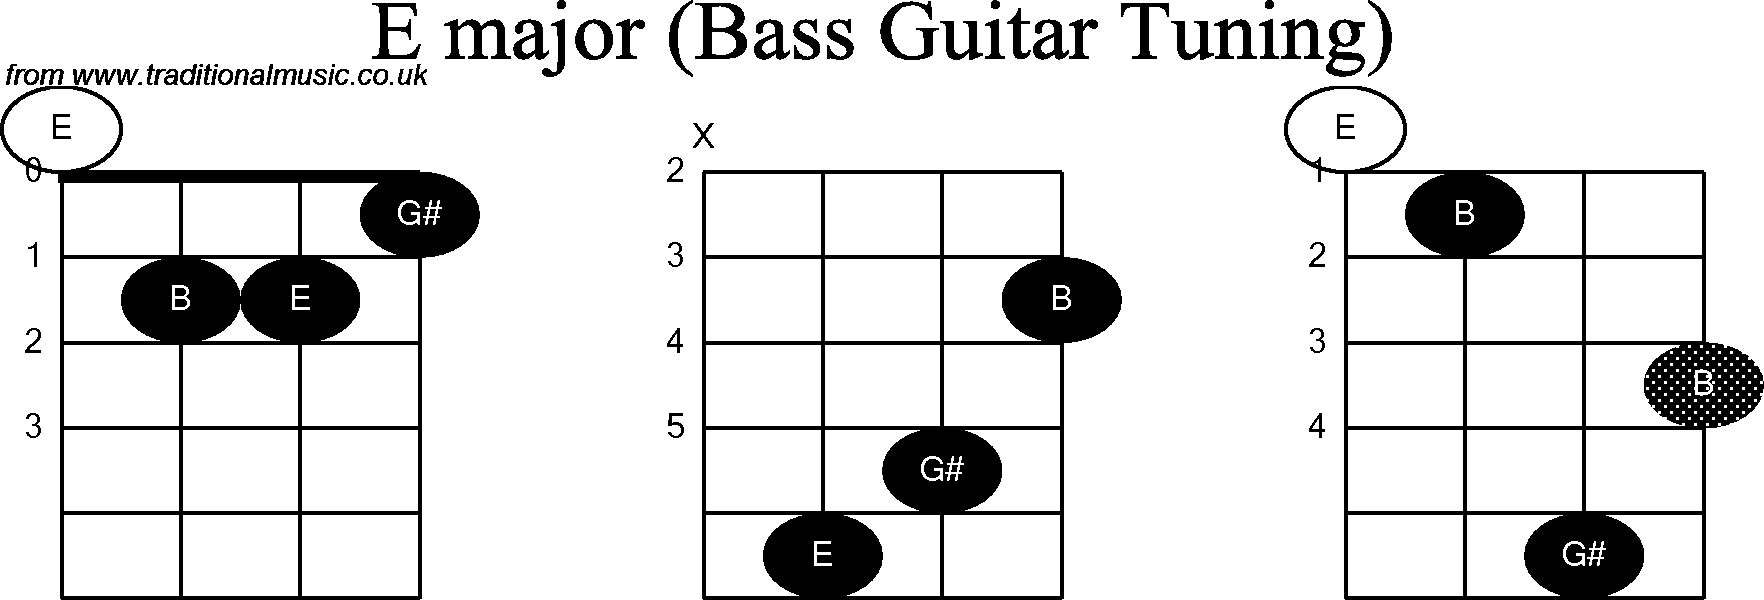 Bass Guitar chord charts for: E